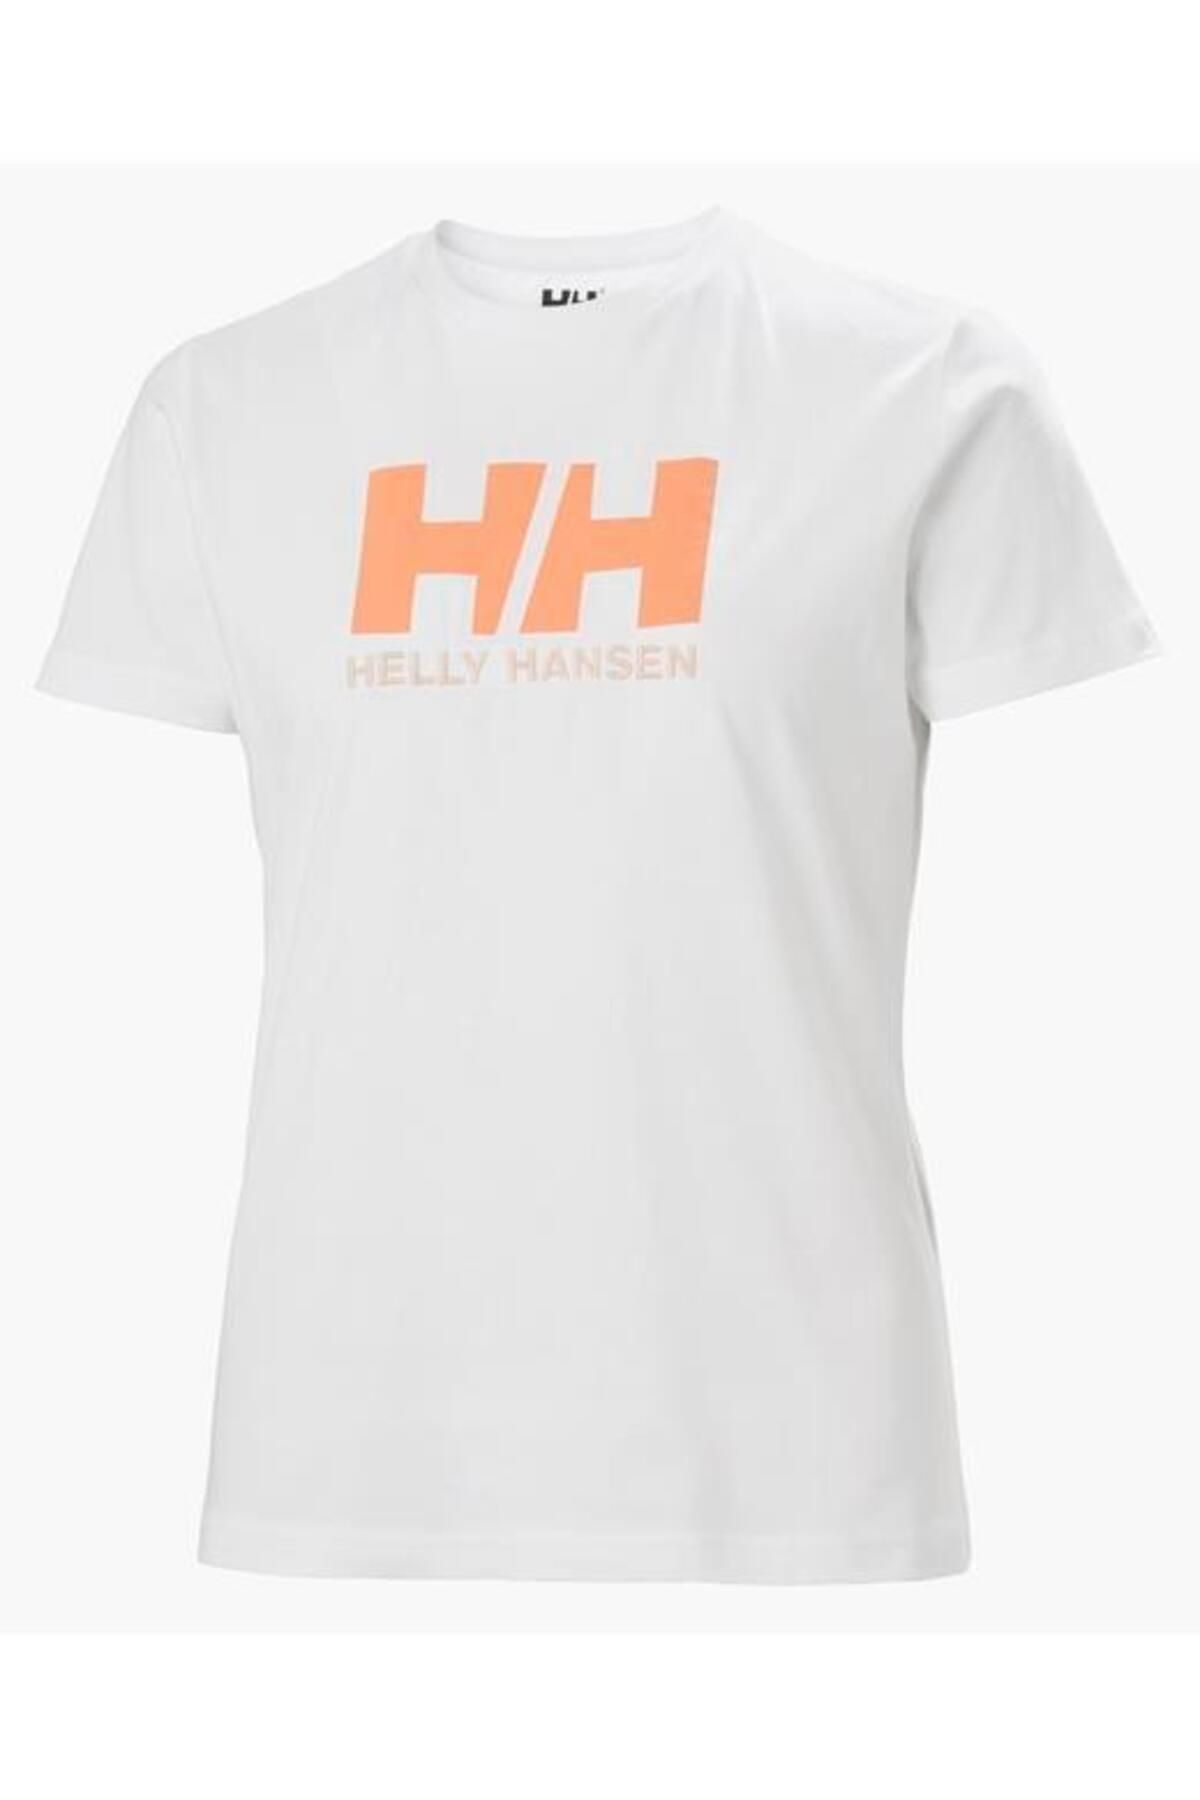 Helly Hansen W Logo T-shirt